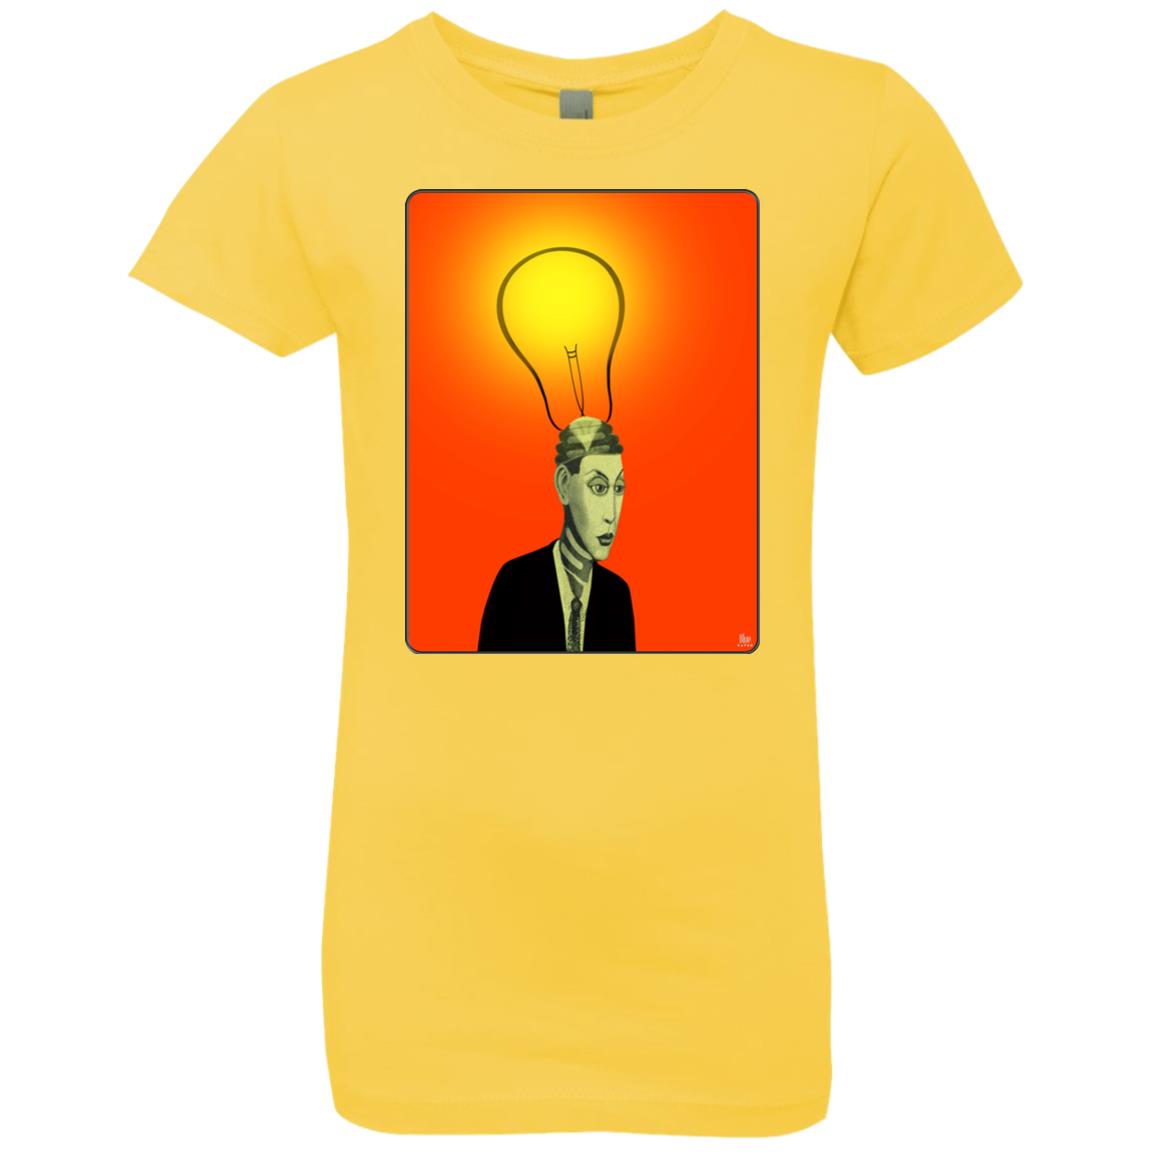 BRIGHT IDEA - Girl's Premium Cotton T-Shirt